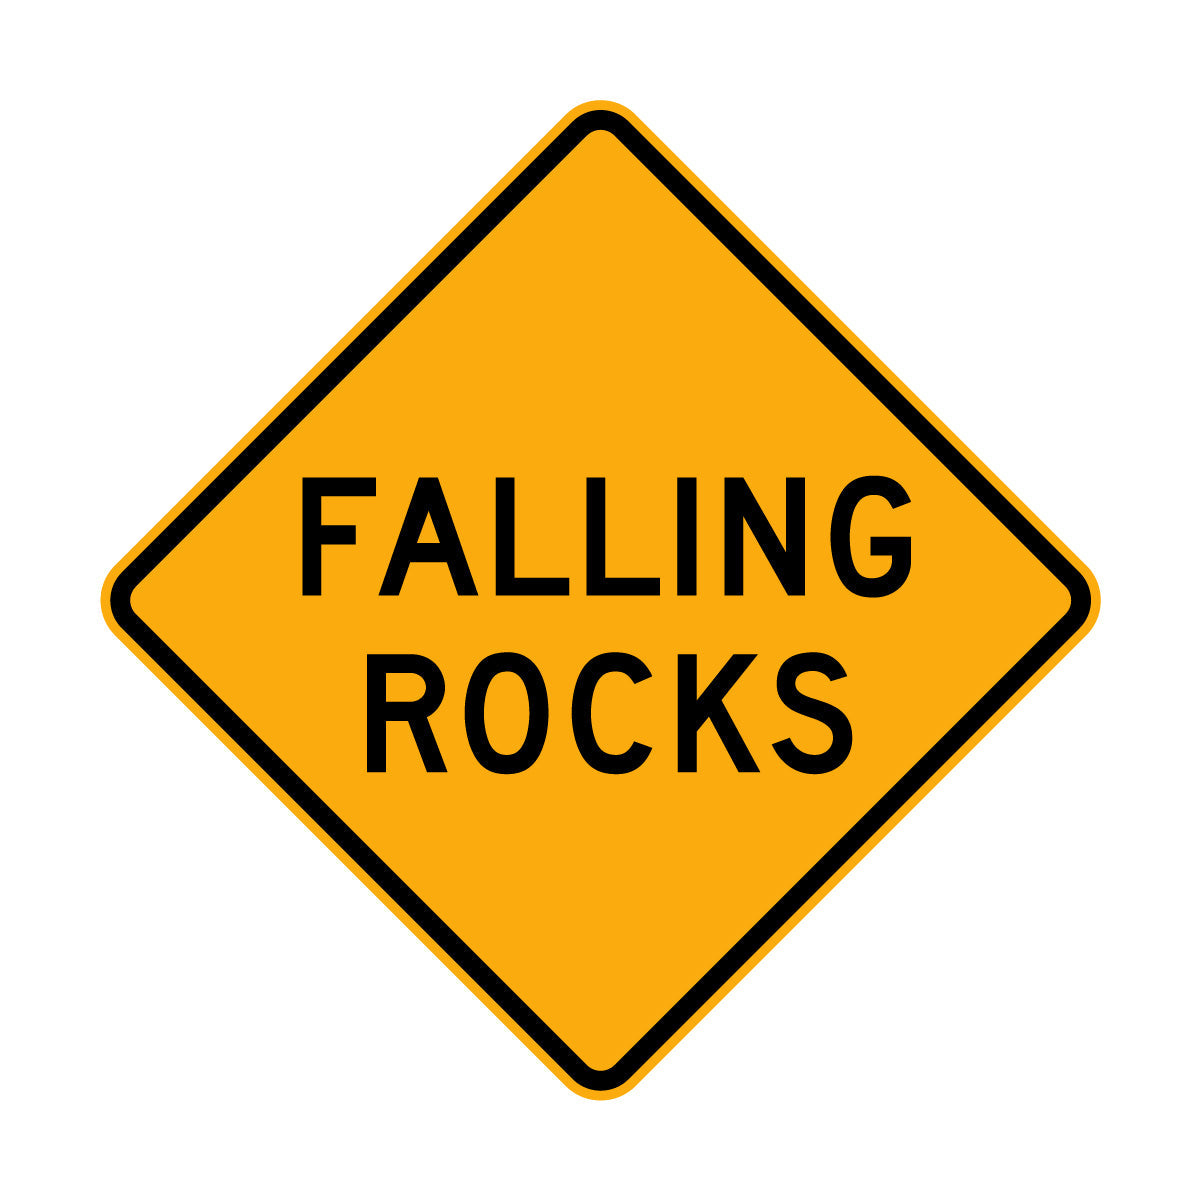 Warning: Falling Rocks Sign